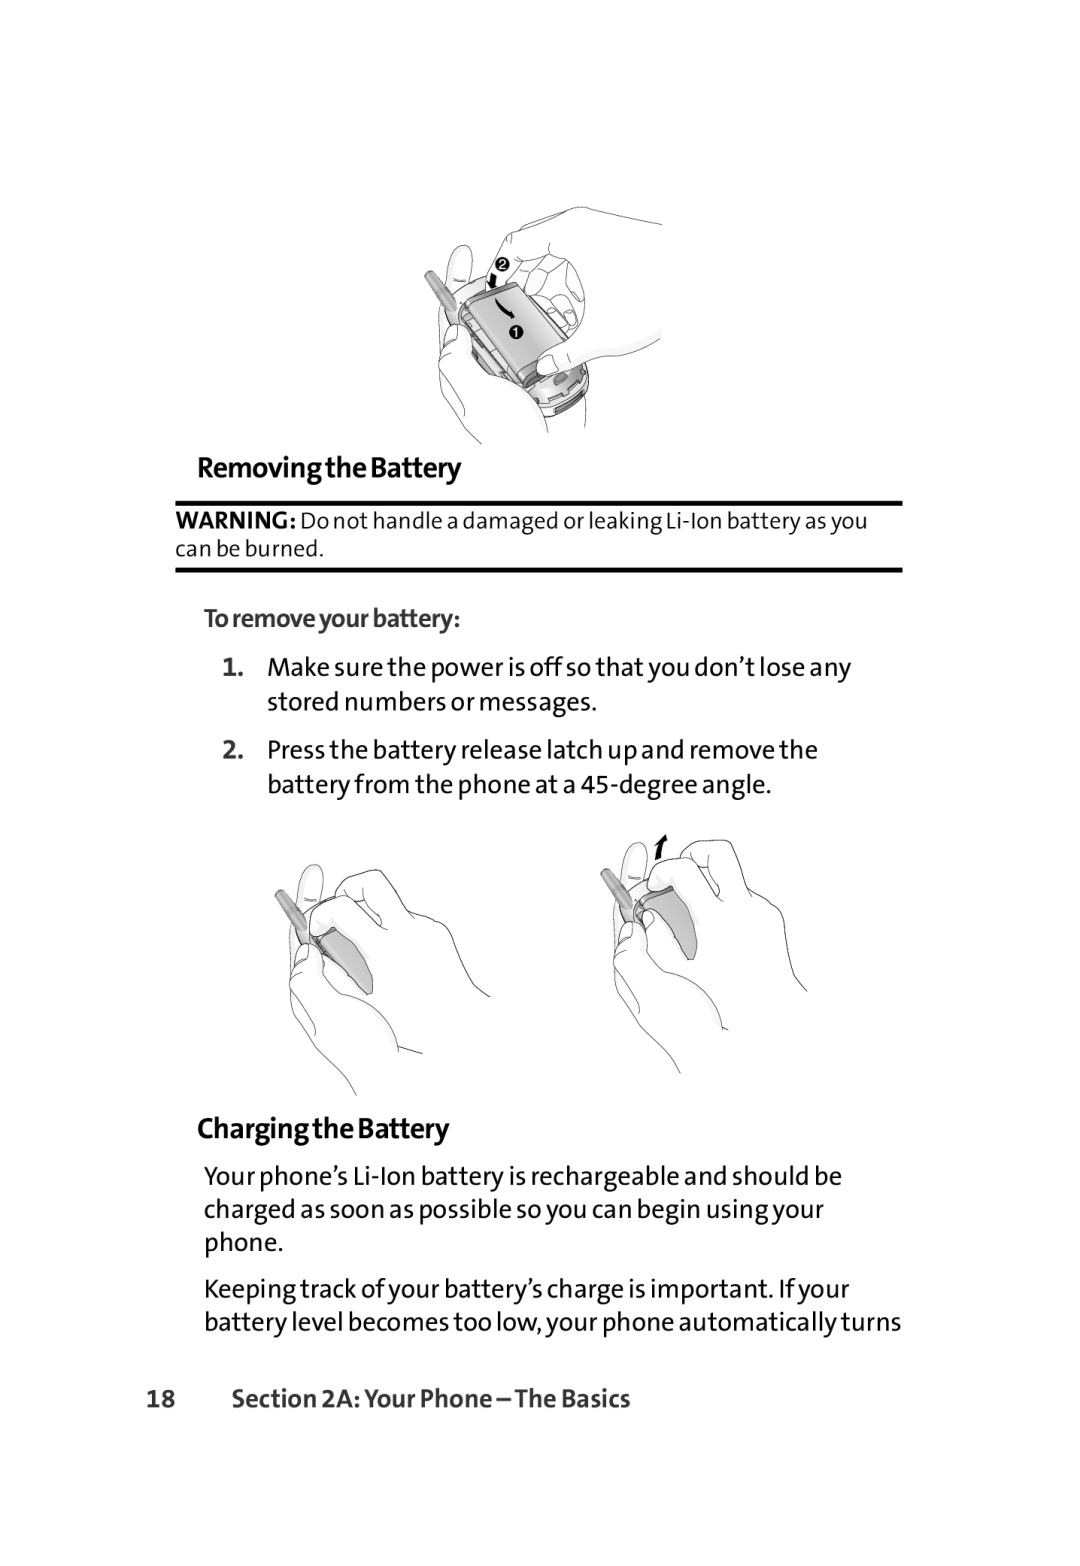 LG Electronics 350 manual RemovingtheBattery, ChargingtheBattery, Toremoveyourbattery, A Your Phone - The Basics 